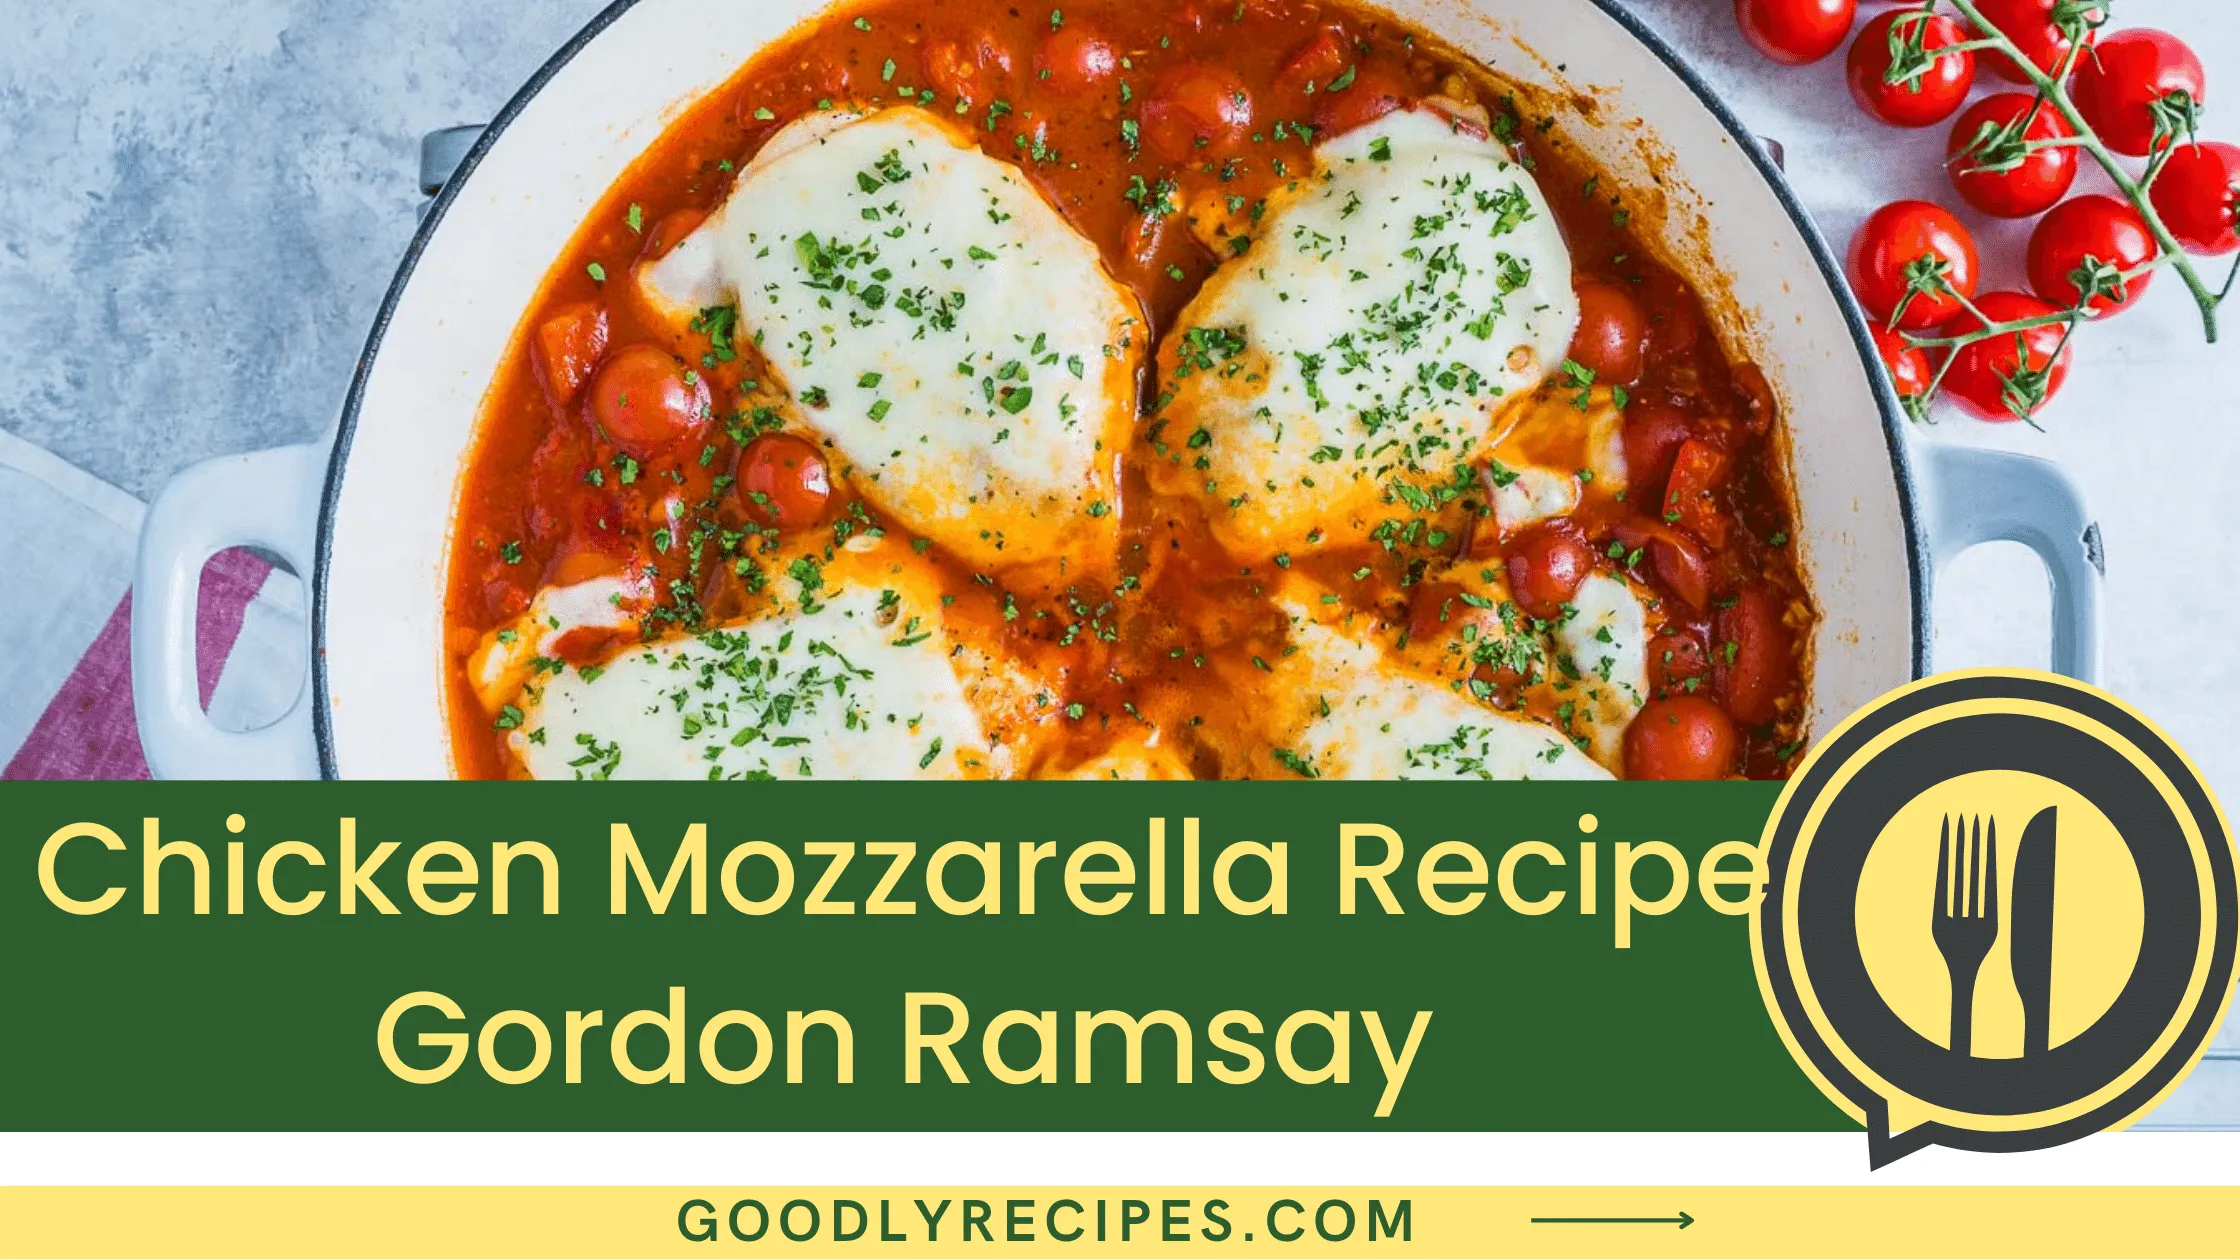 Chicken Mozzarella Recipe Gordon Ramsay